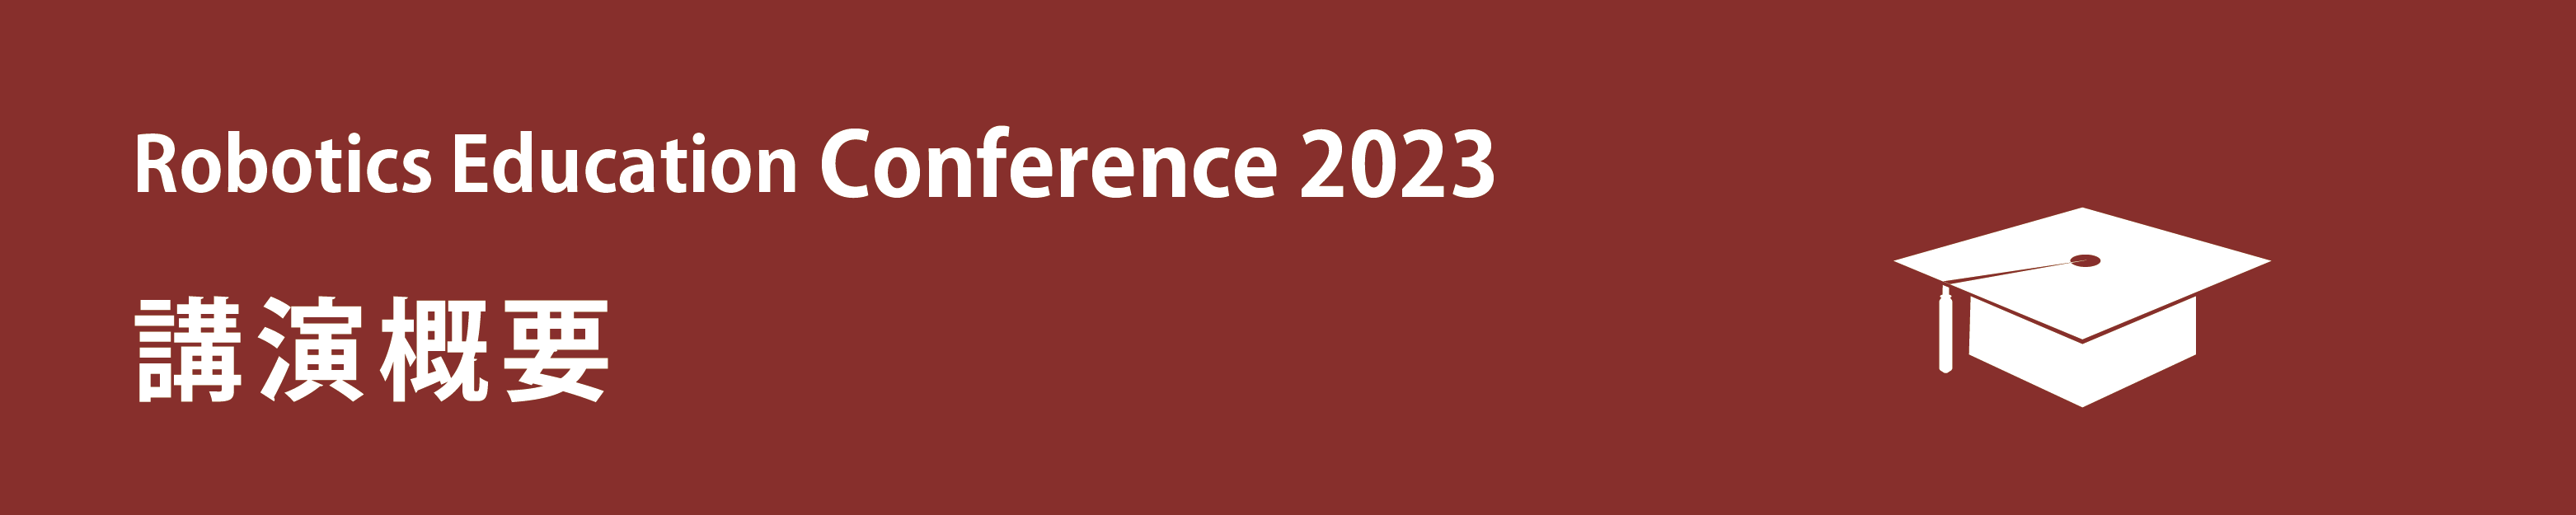 Robotics Education Conference 2023の講演概要のアイキャッチ画像